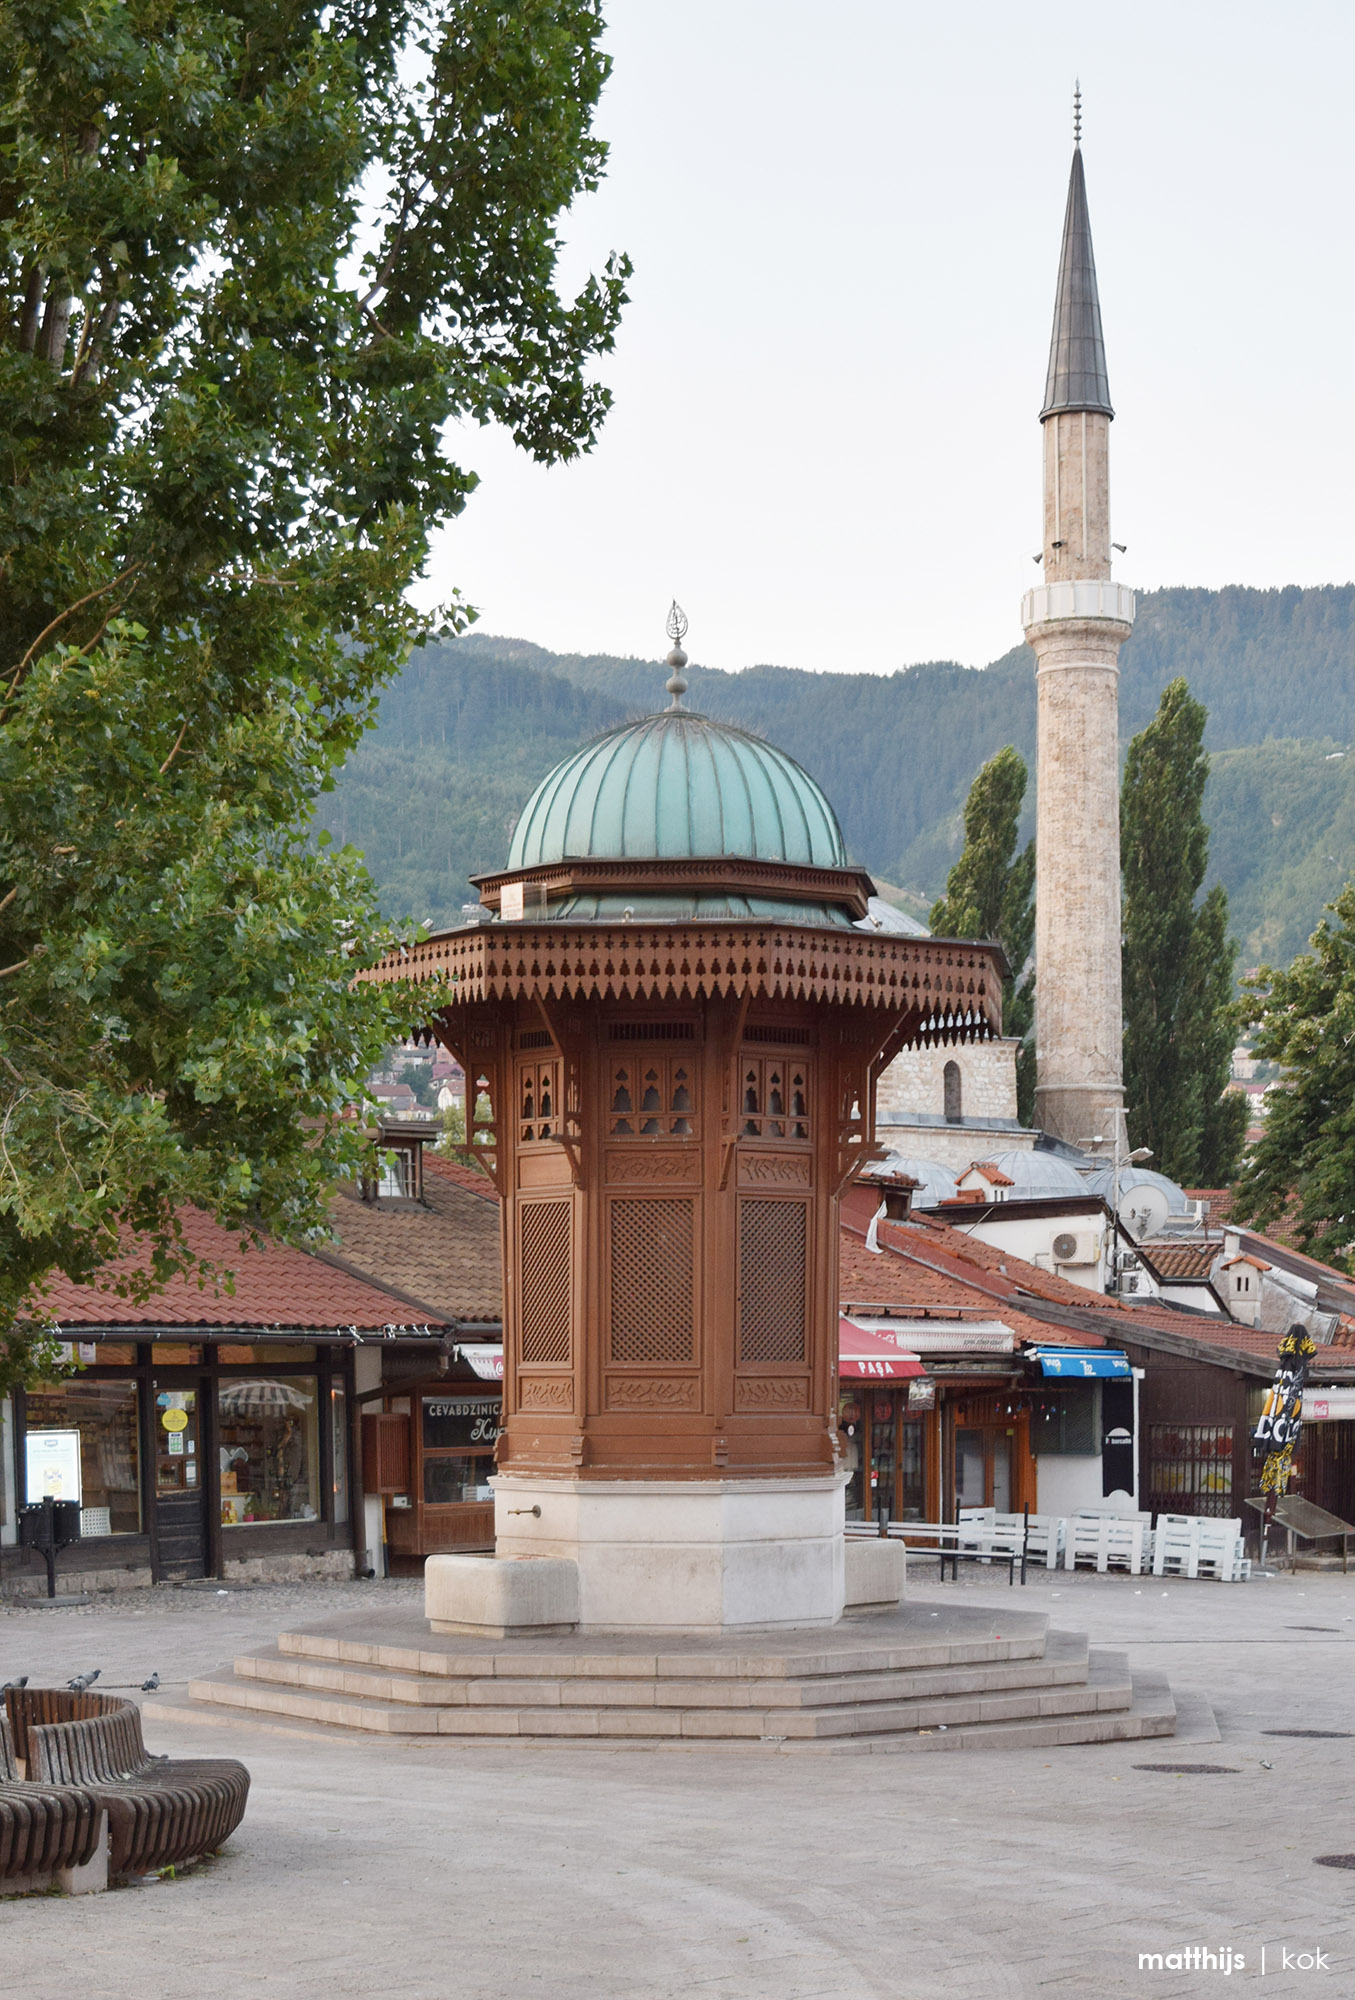 Baščaršija, Sarajevo, Bosnia & Herzegovina | Photo by Matthijs Kok